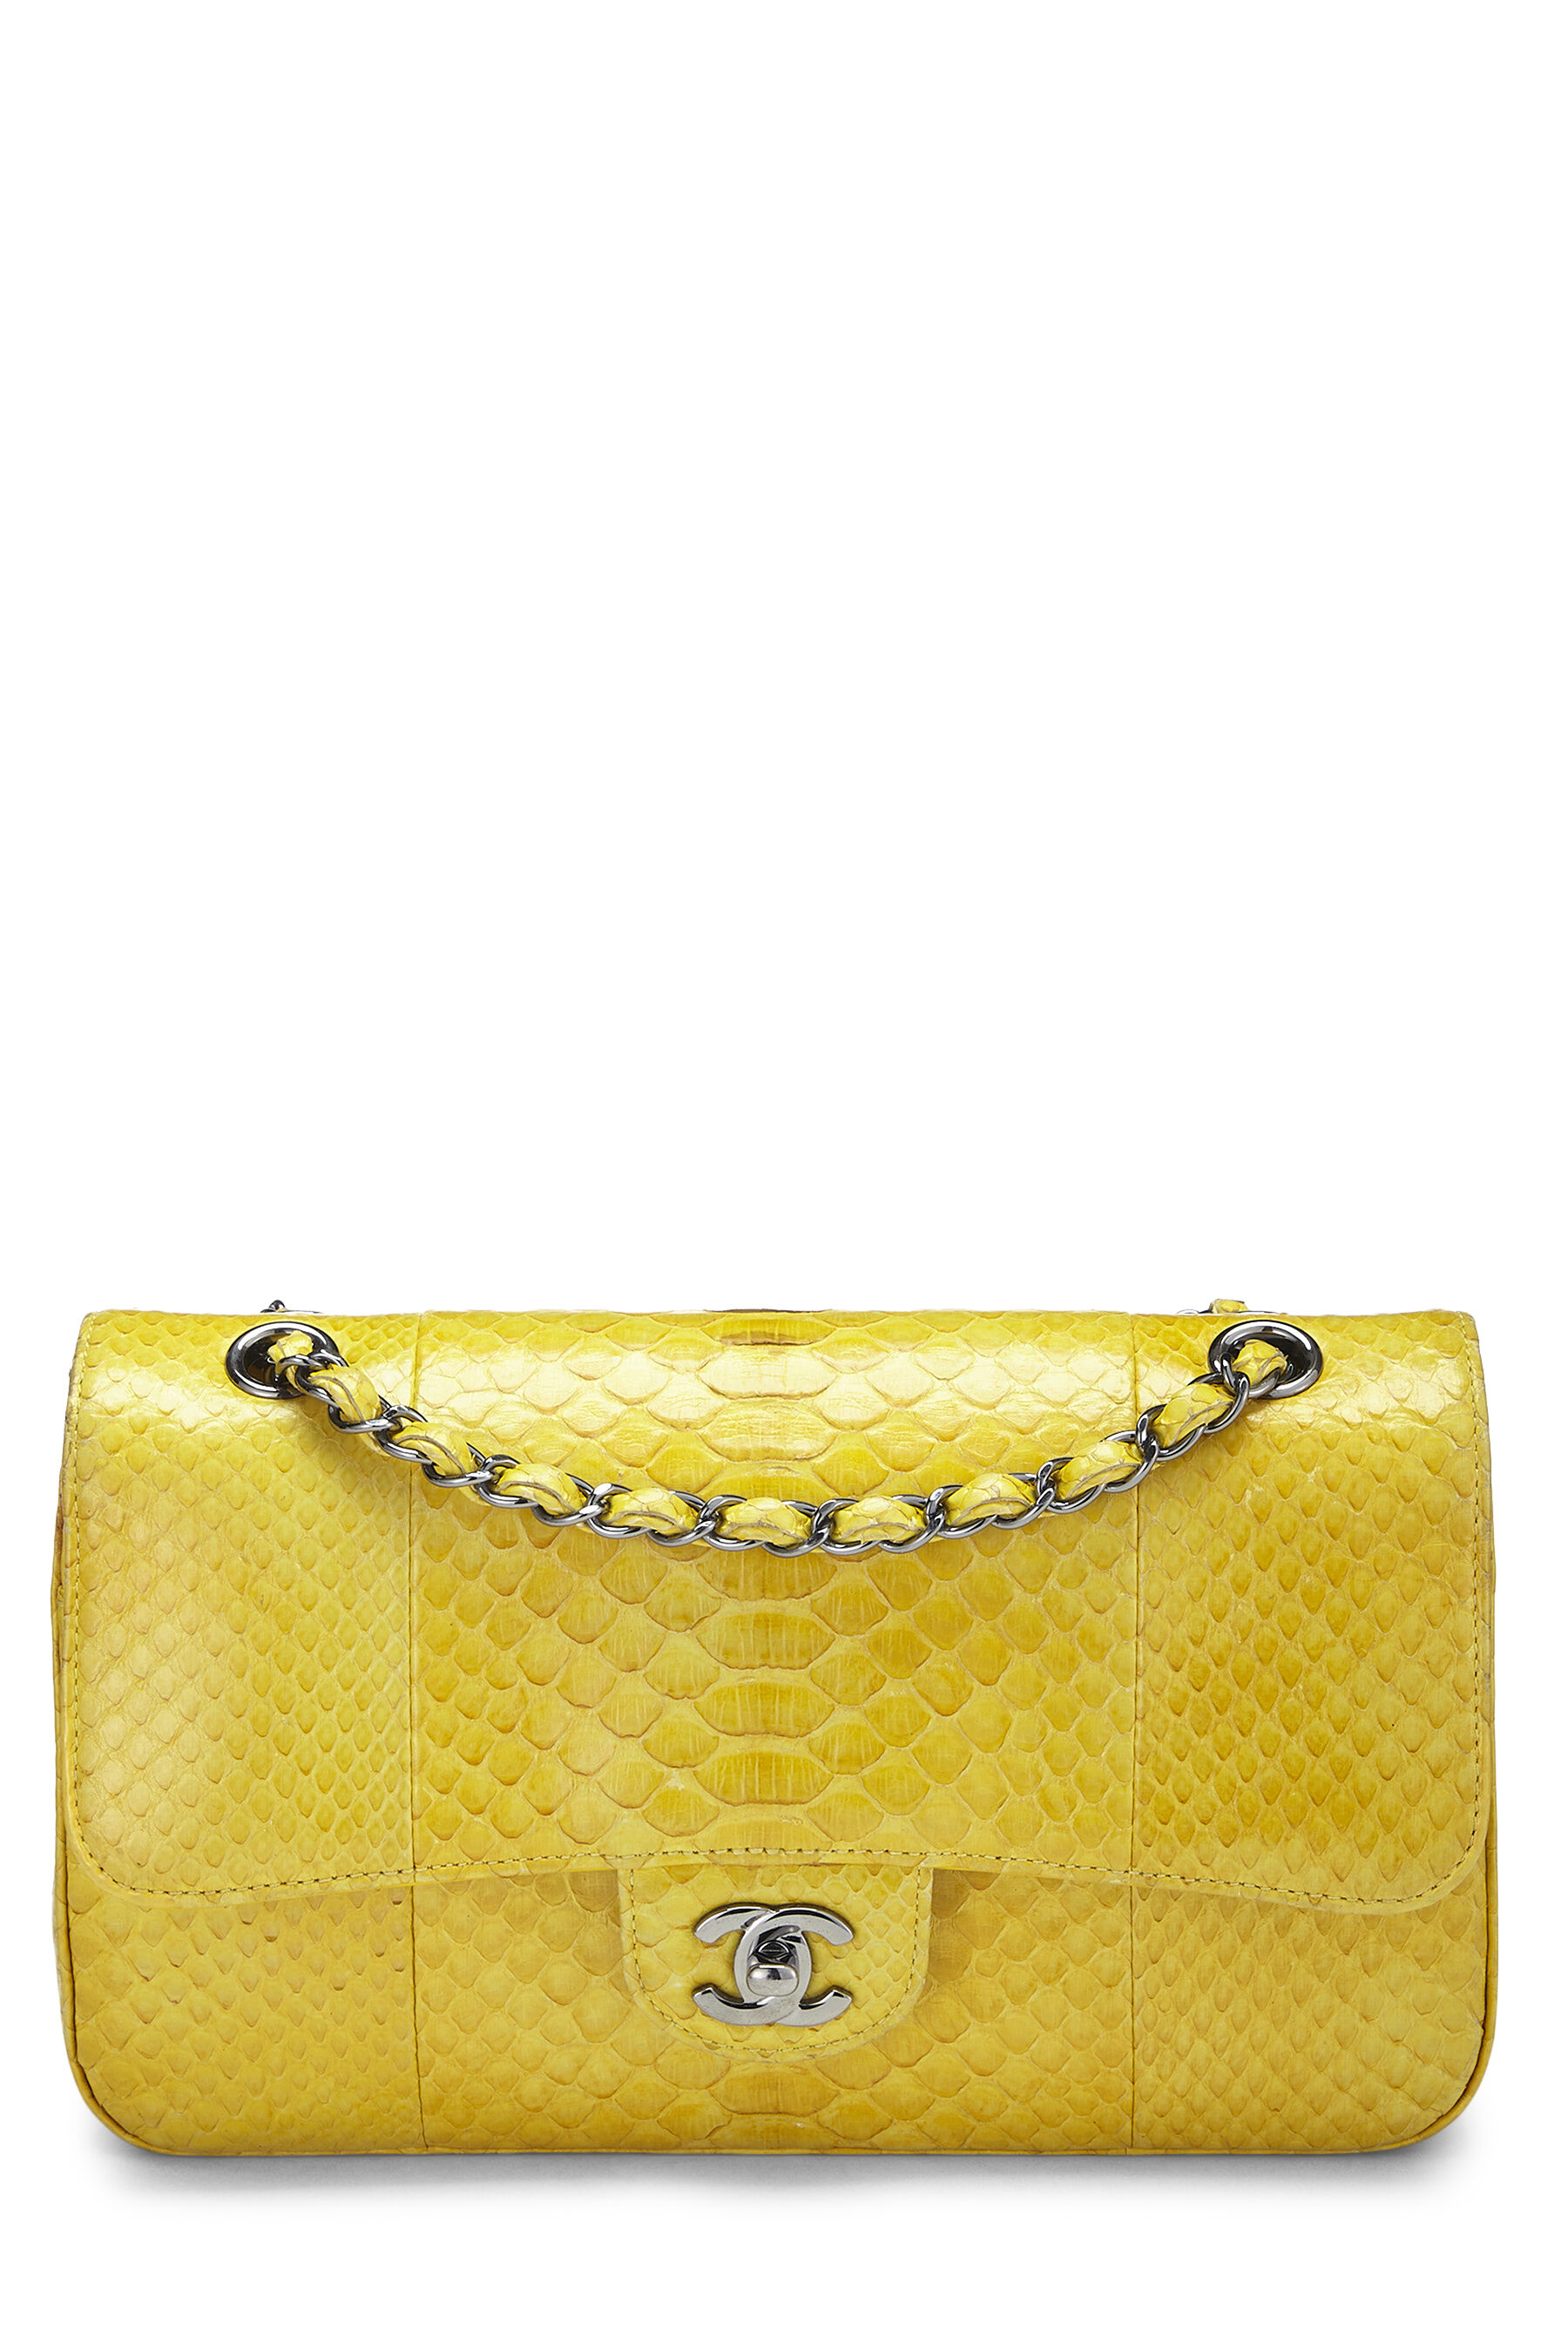 Chanel - Yellow Python Classic Double Flap Medium